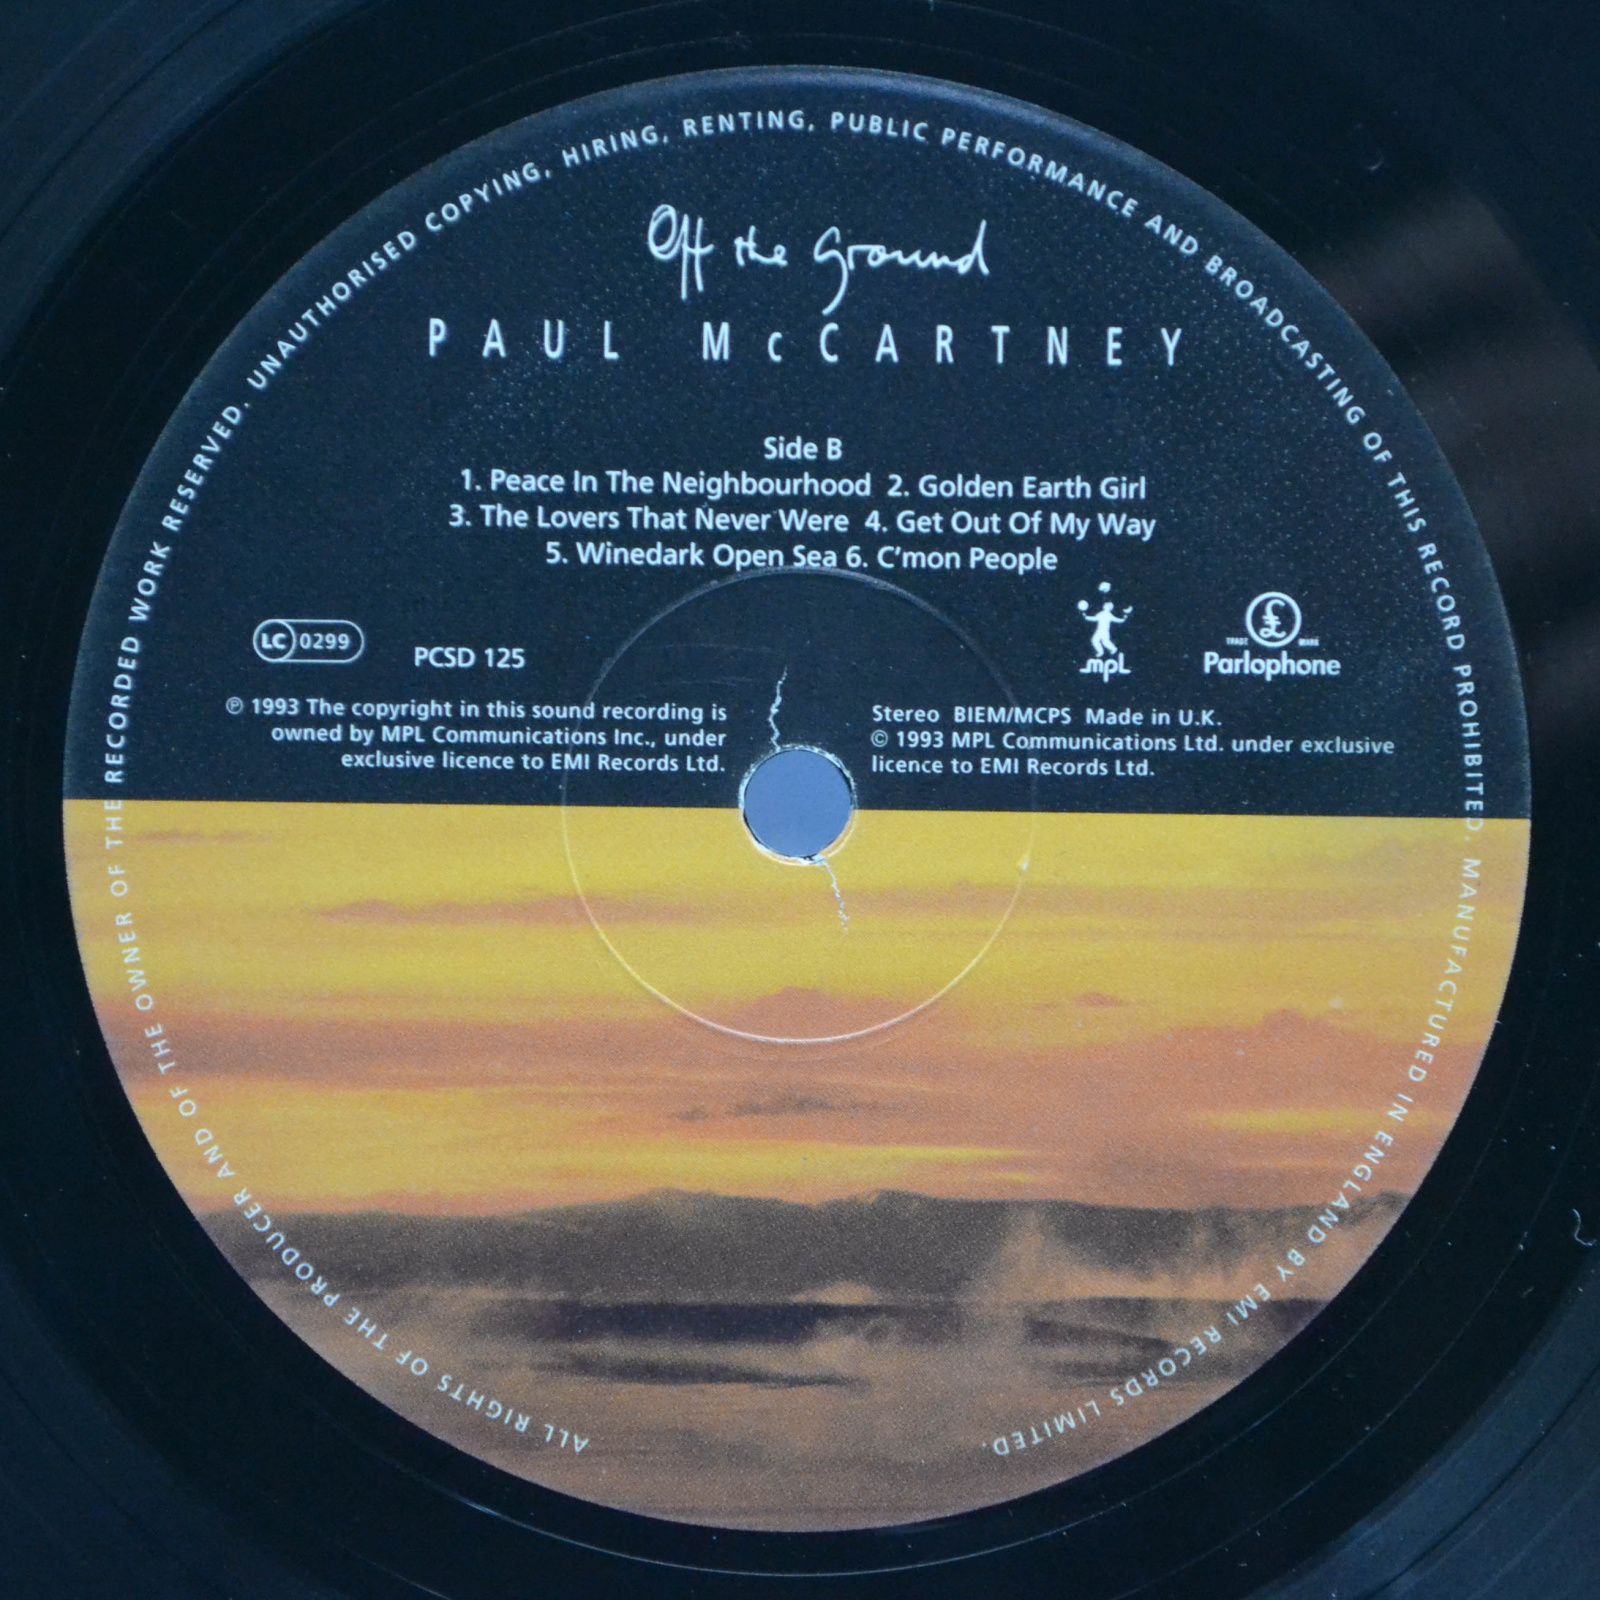 Paul McCartney — Off The Ground, 1993